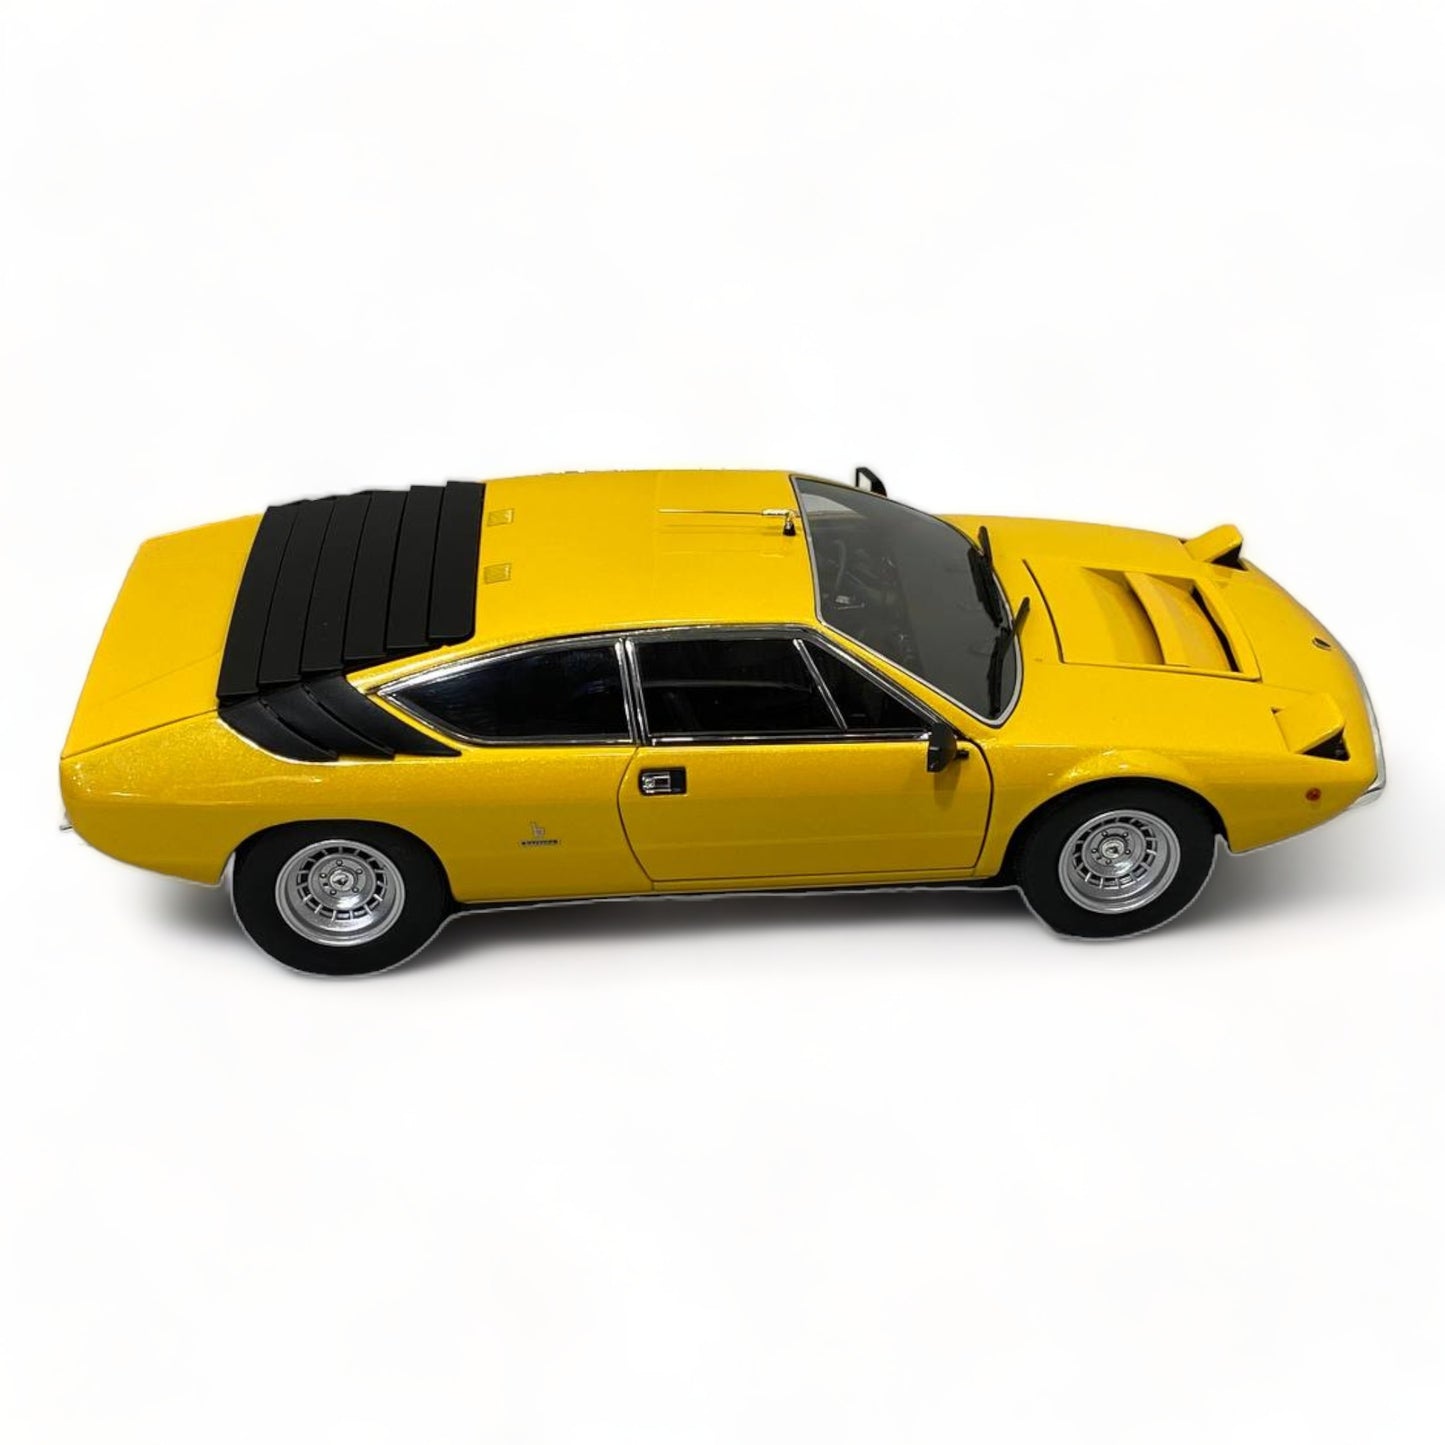 1/18 Diecast KYOSHO Lamborghini Urraco Yellow Scale Model Car|Sold in Dturman.com Dubai UAE.